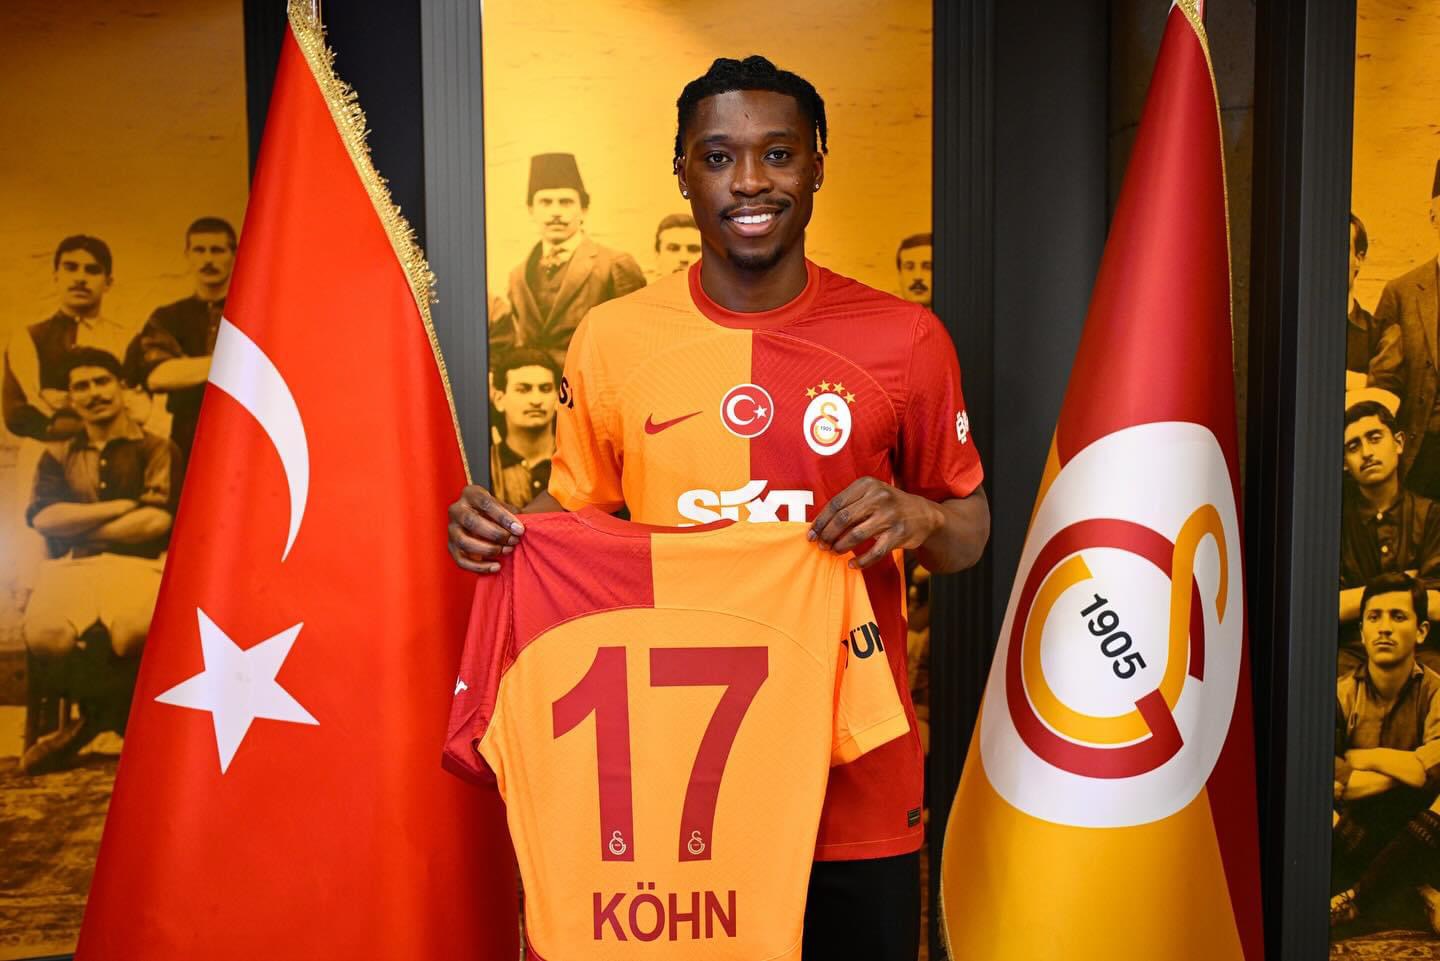 Wearing Galatasaray shirt valuable for me - Ghana’s Derrick Köhn